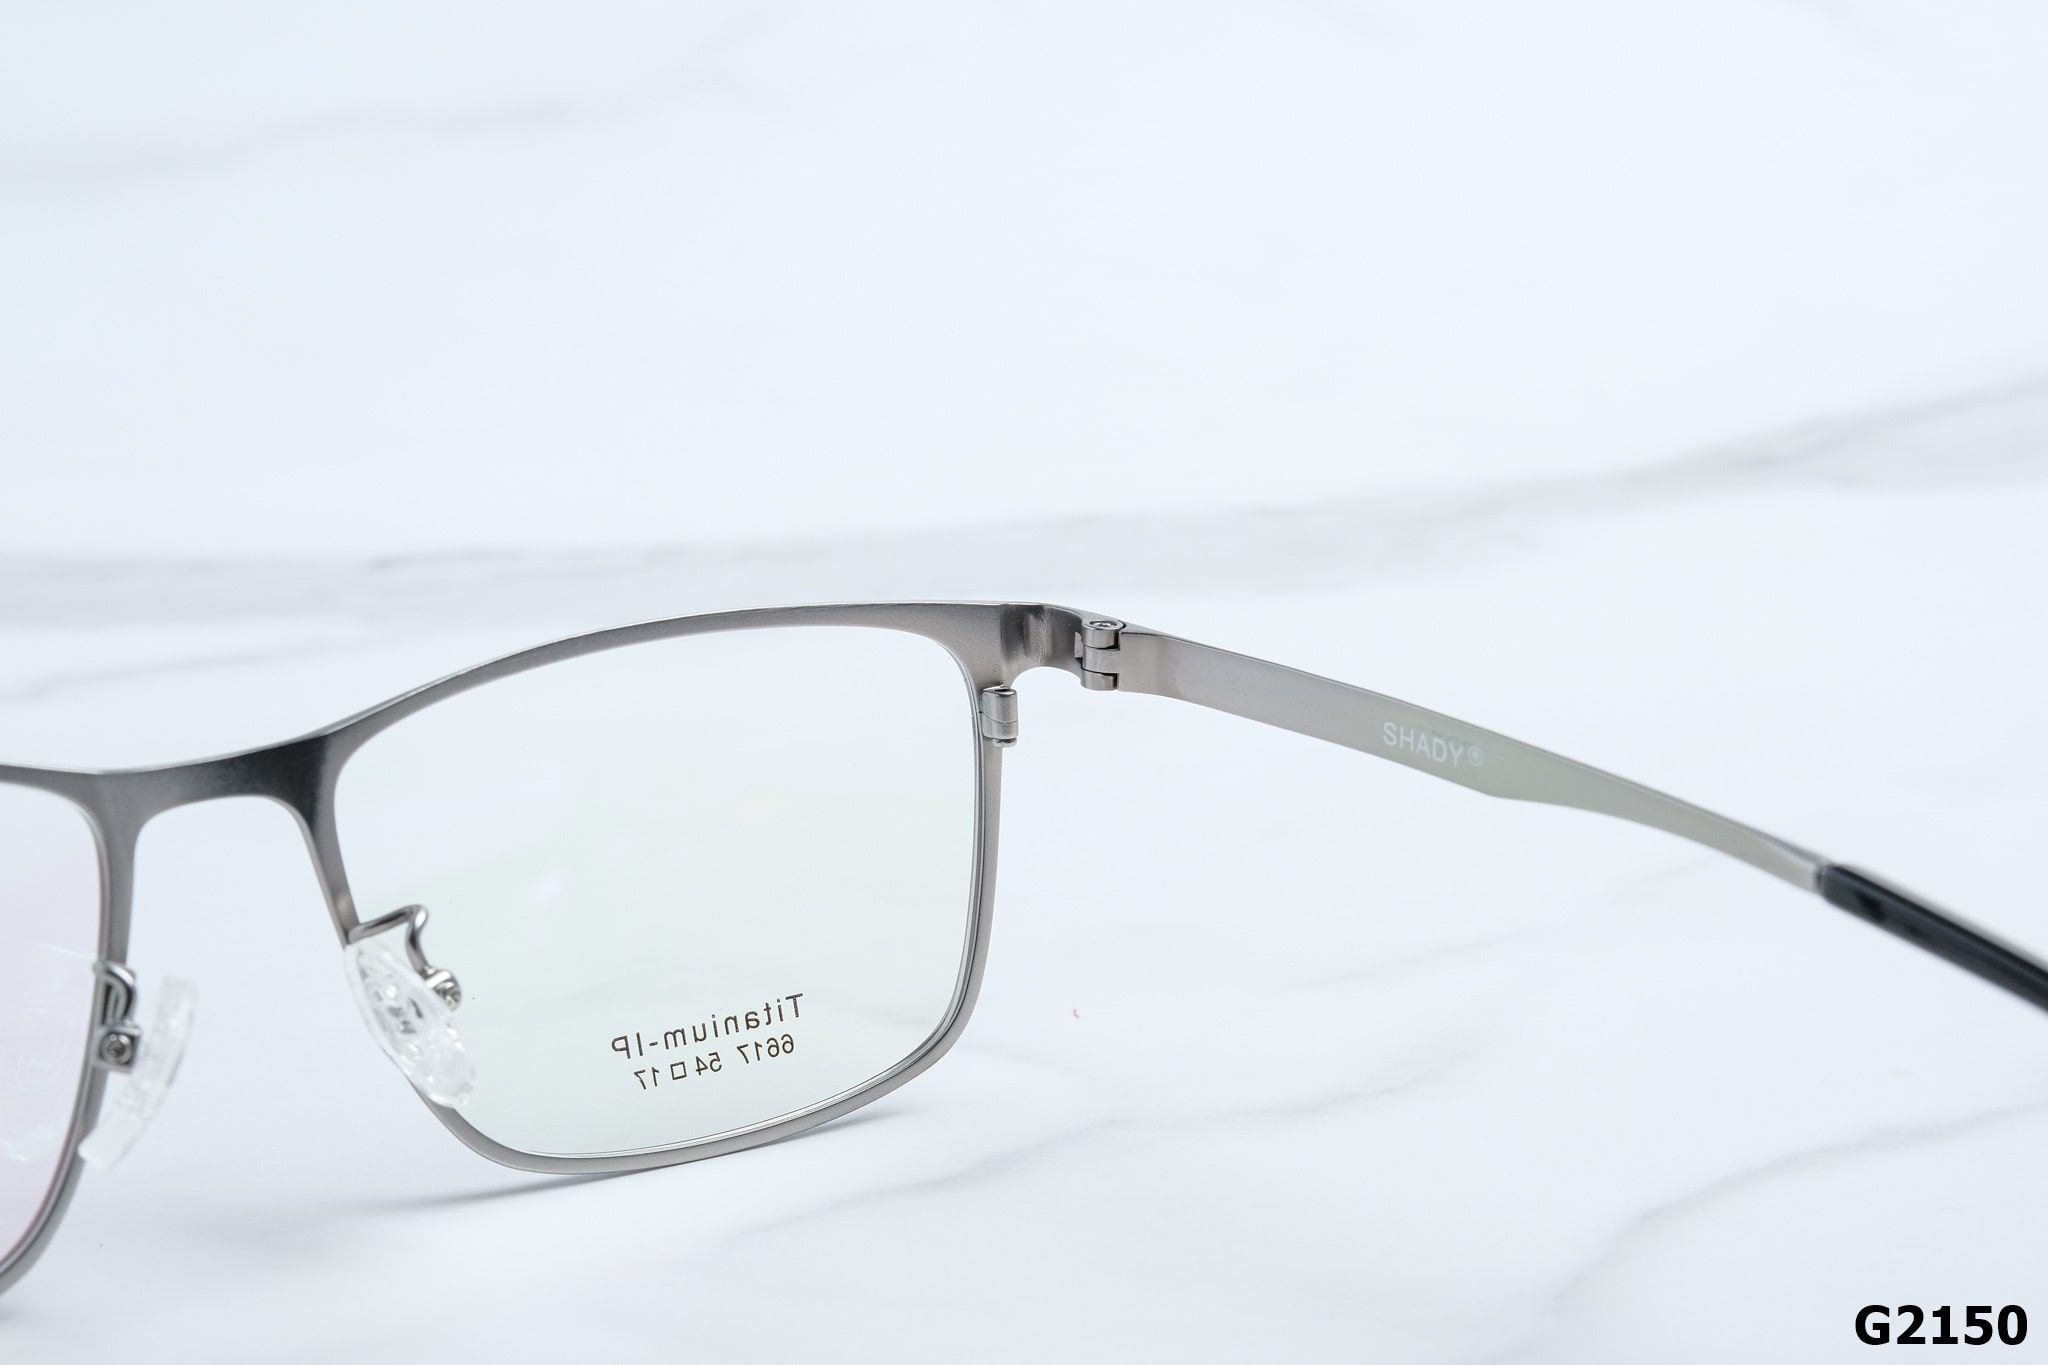  SHADY Eyewear - Glasses - G2150 